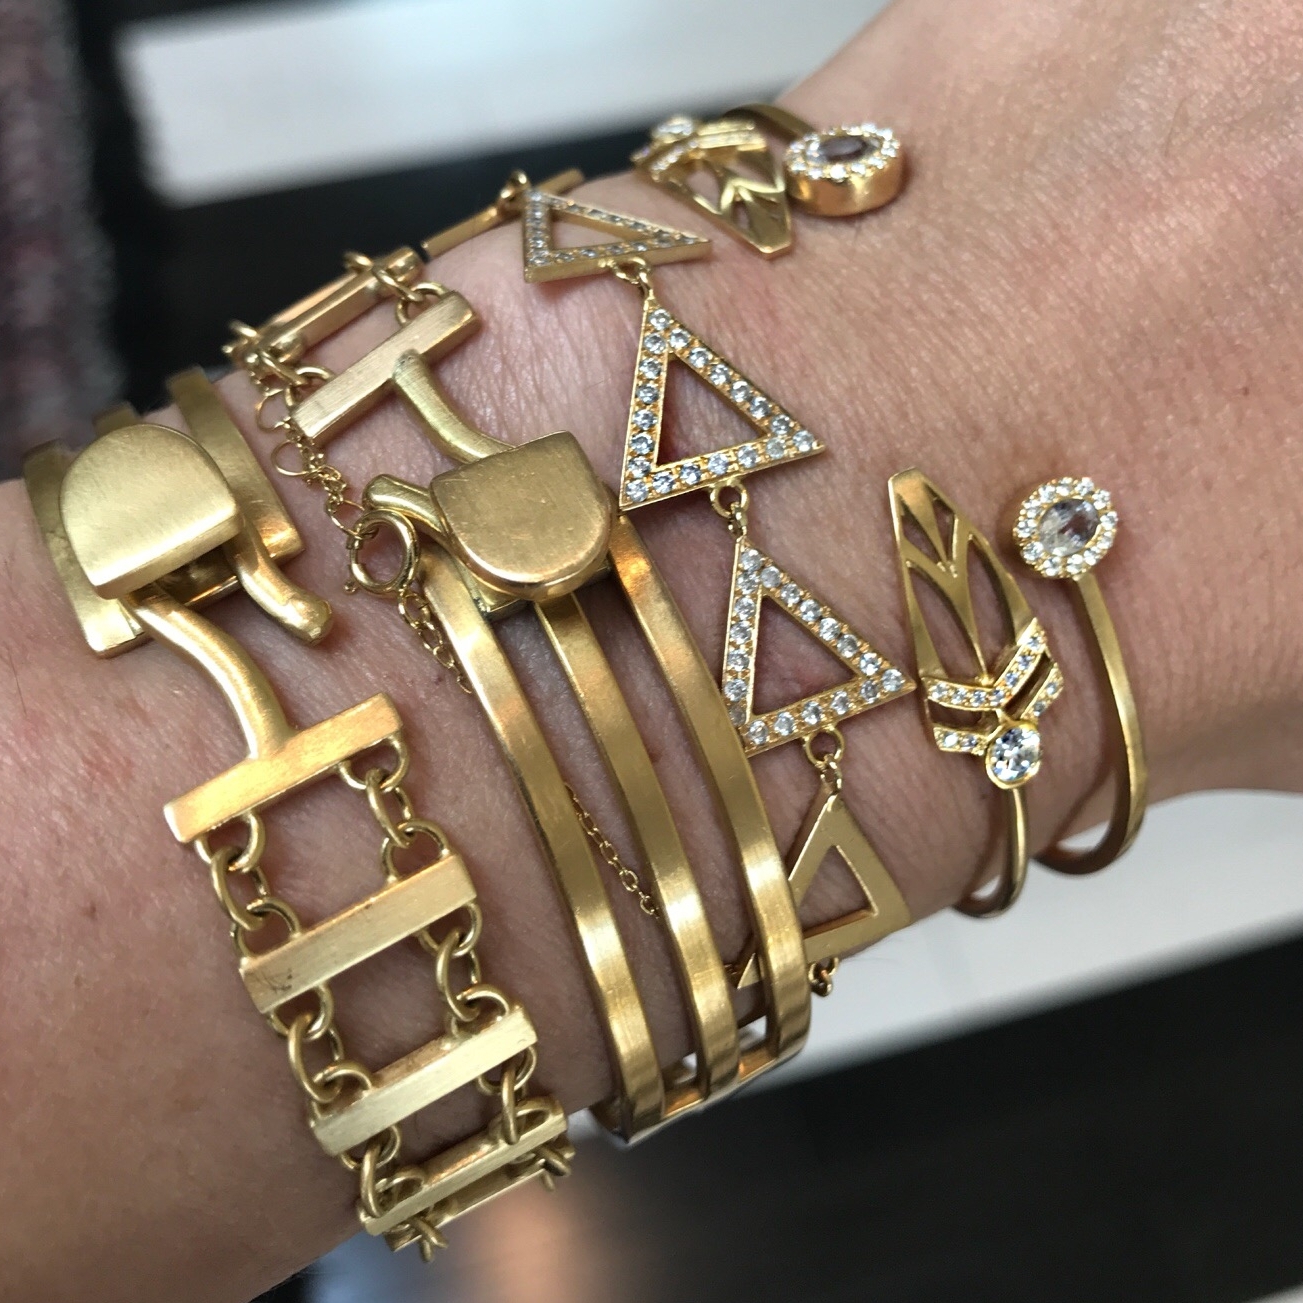 Halleh's Armor: Stacked bracelets